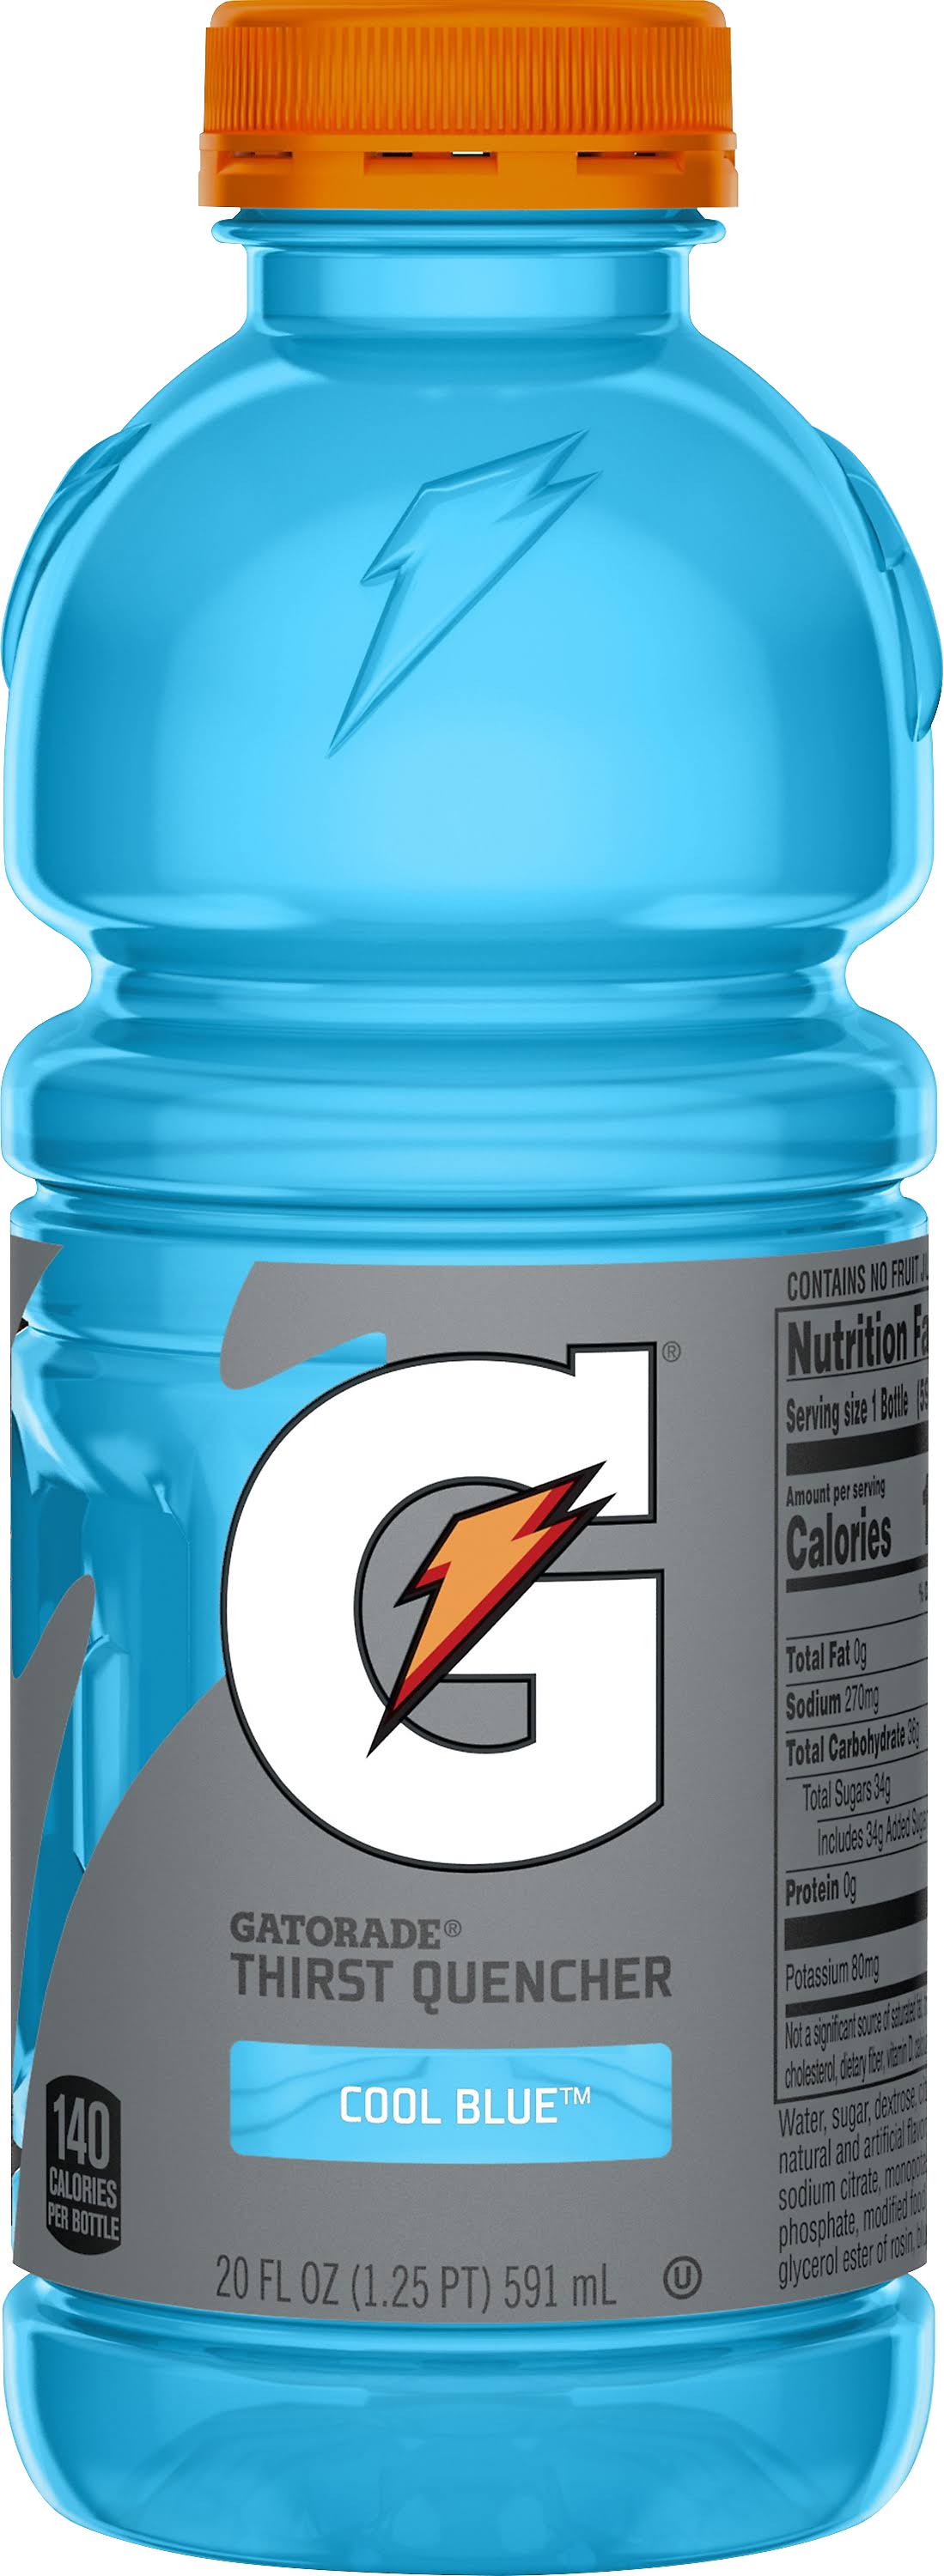 Gatorade Thirst Quencher - Cool Blue, 591ml